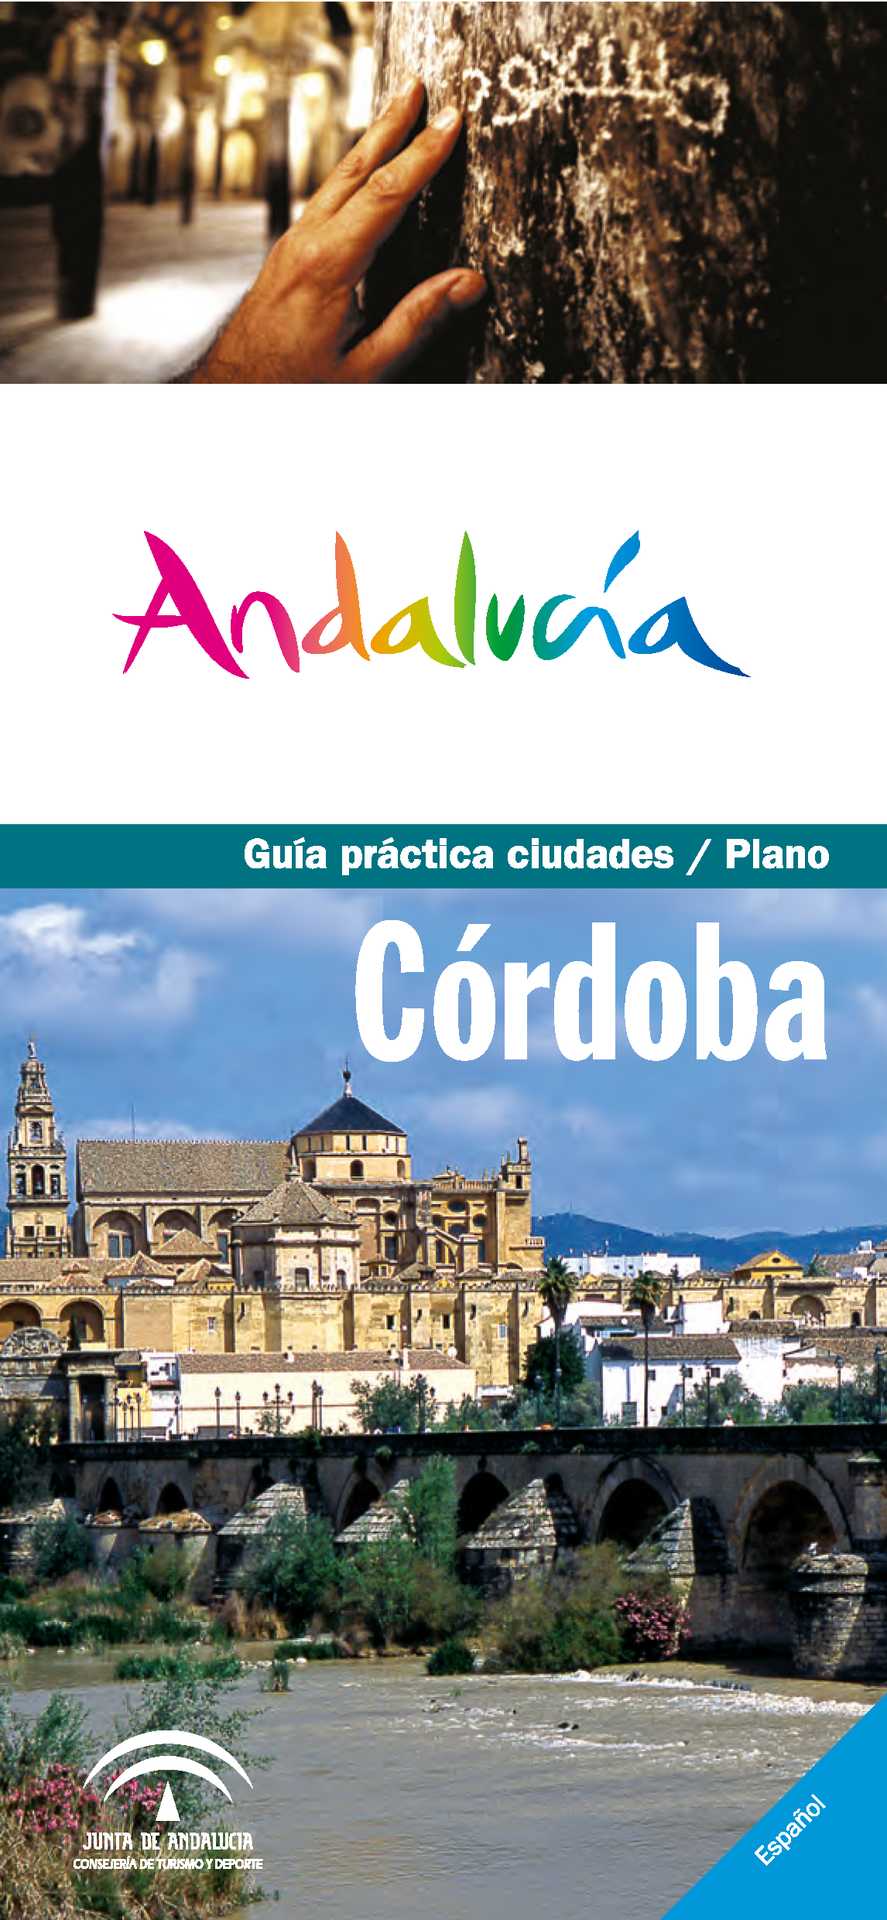 https://multimedia.andalucia.org/media/907363DAE52D4C319ED0EB2707ECBE75/img/186245117C3B4E758BD82ADD7B8CA505/guia_practica_ciudad_cordoba.jpg?responsive